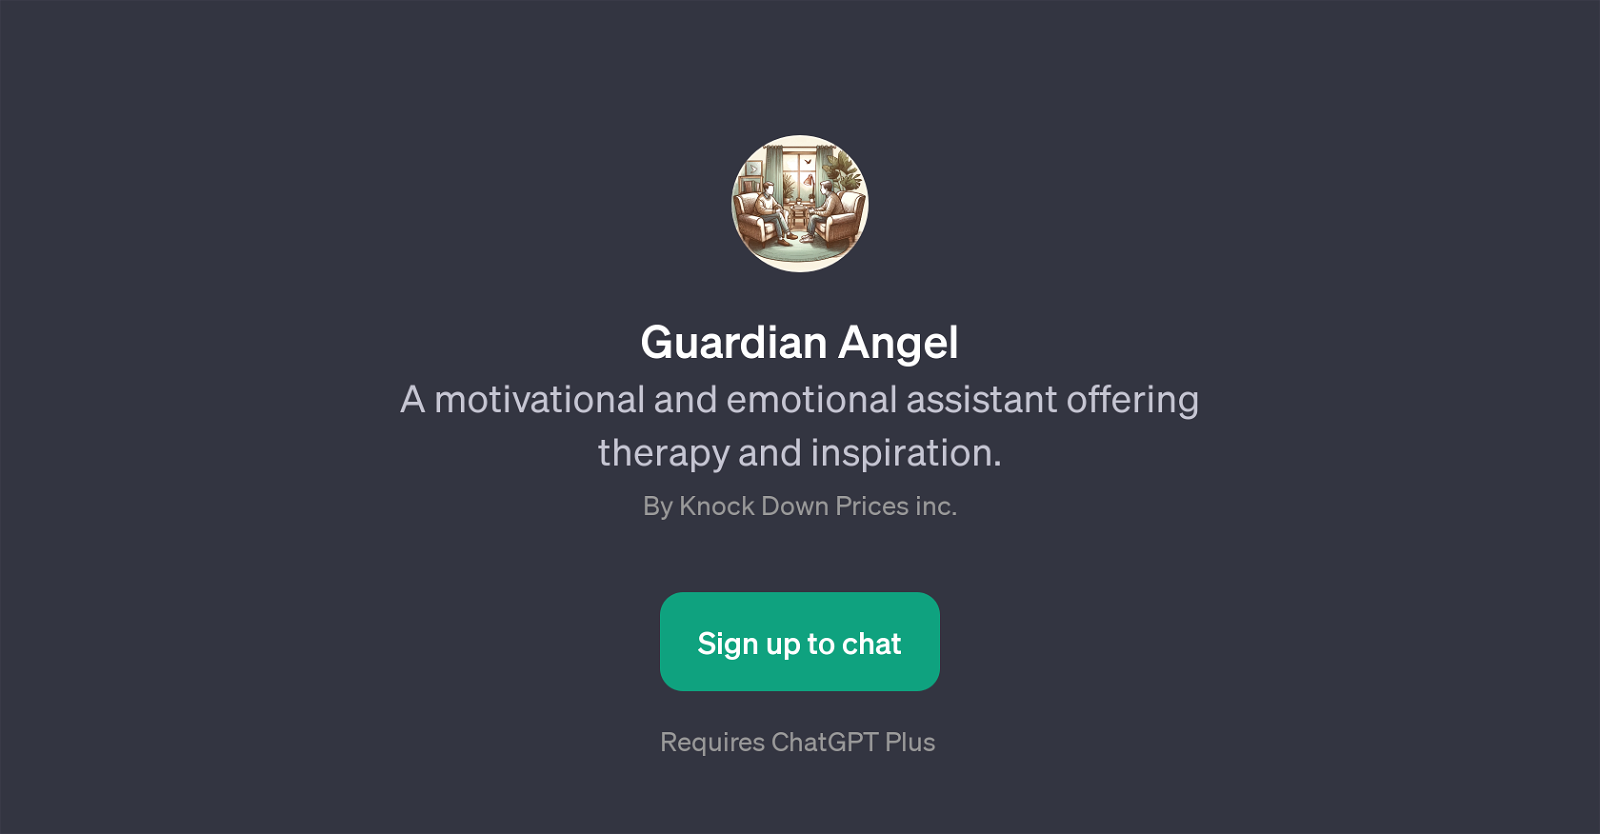 Guardian Angel website